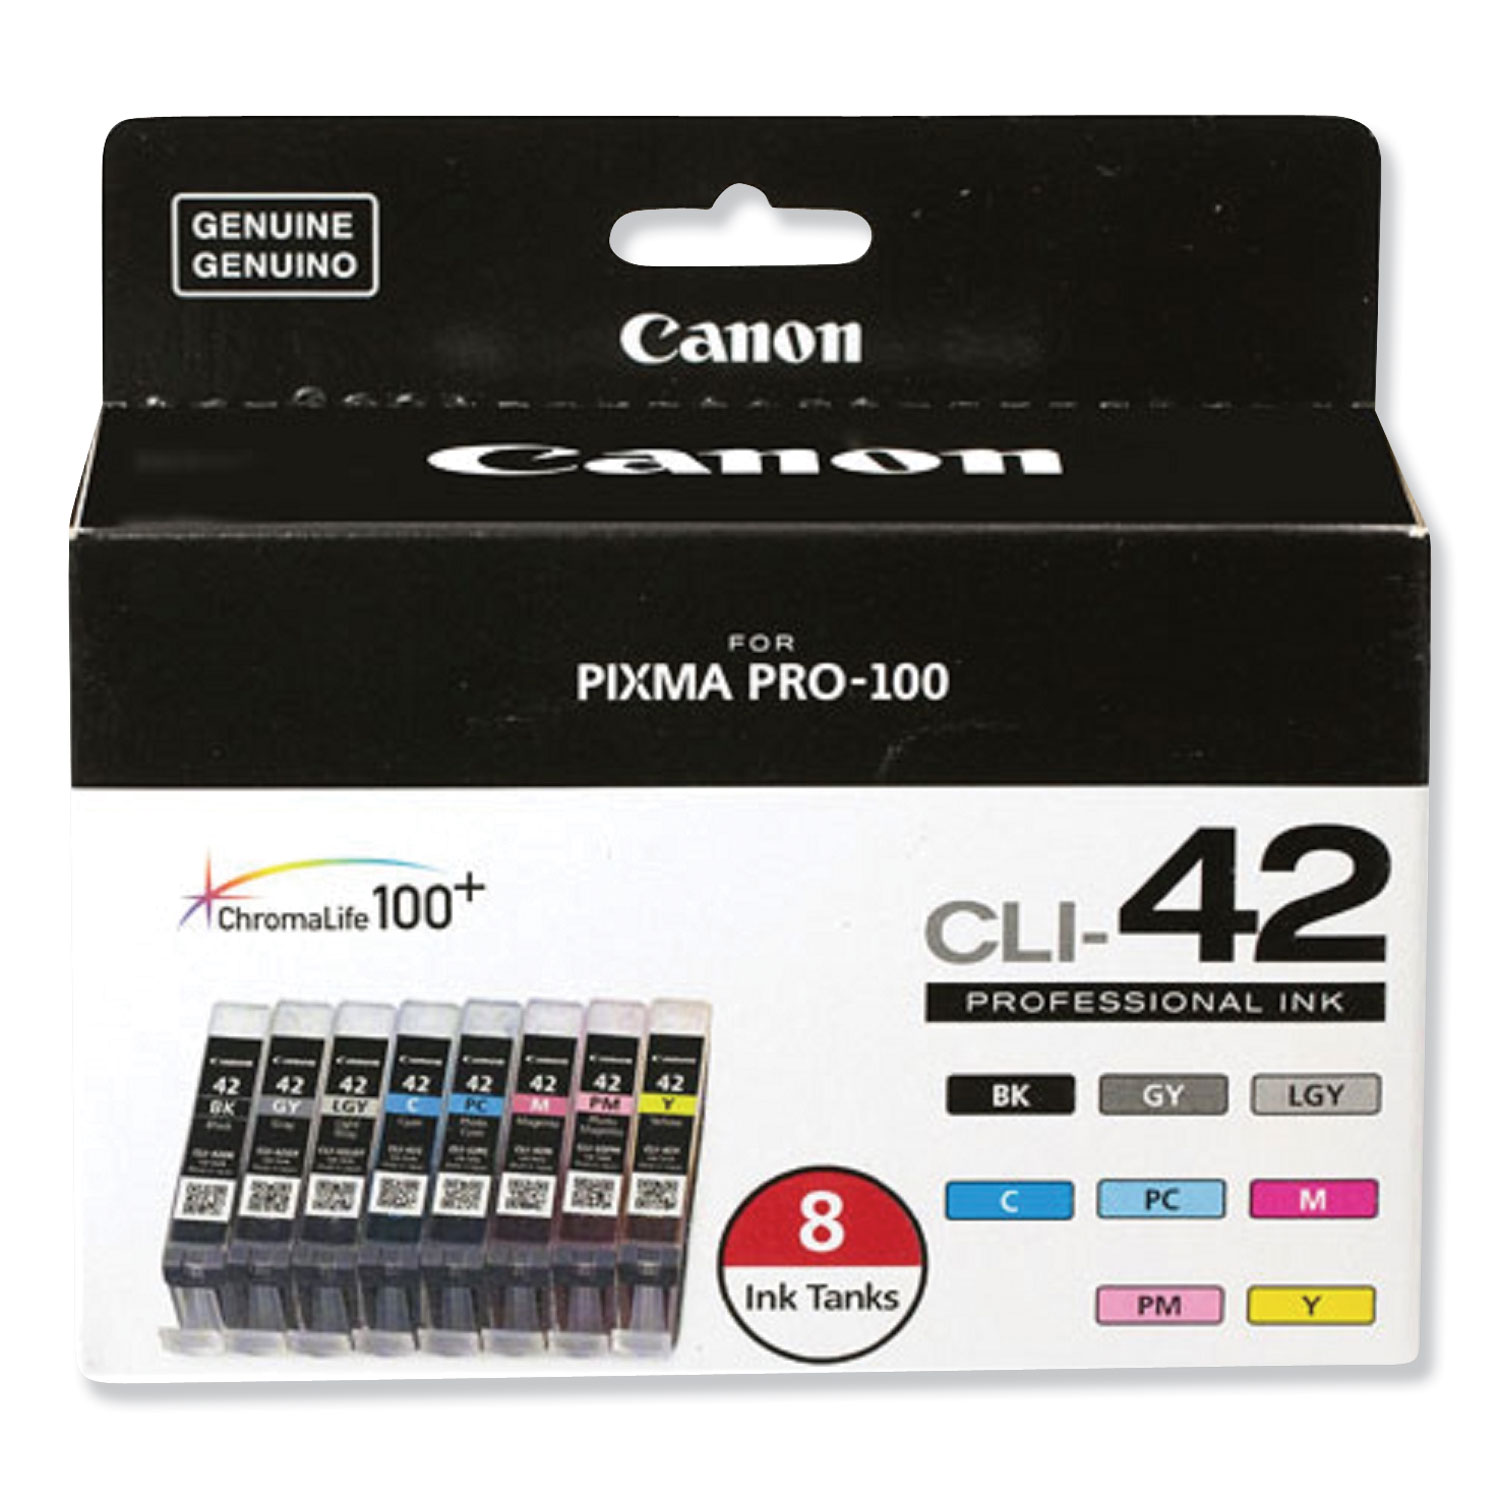  Canon 6384B007 6384B007 (CLI-42) ChromaLife100+ Ink, Black; Cyan; Magenta; Yellow; Photo Cyan; Photo Magenta; Gray; Light Gray (CNM6384B007) 